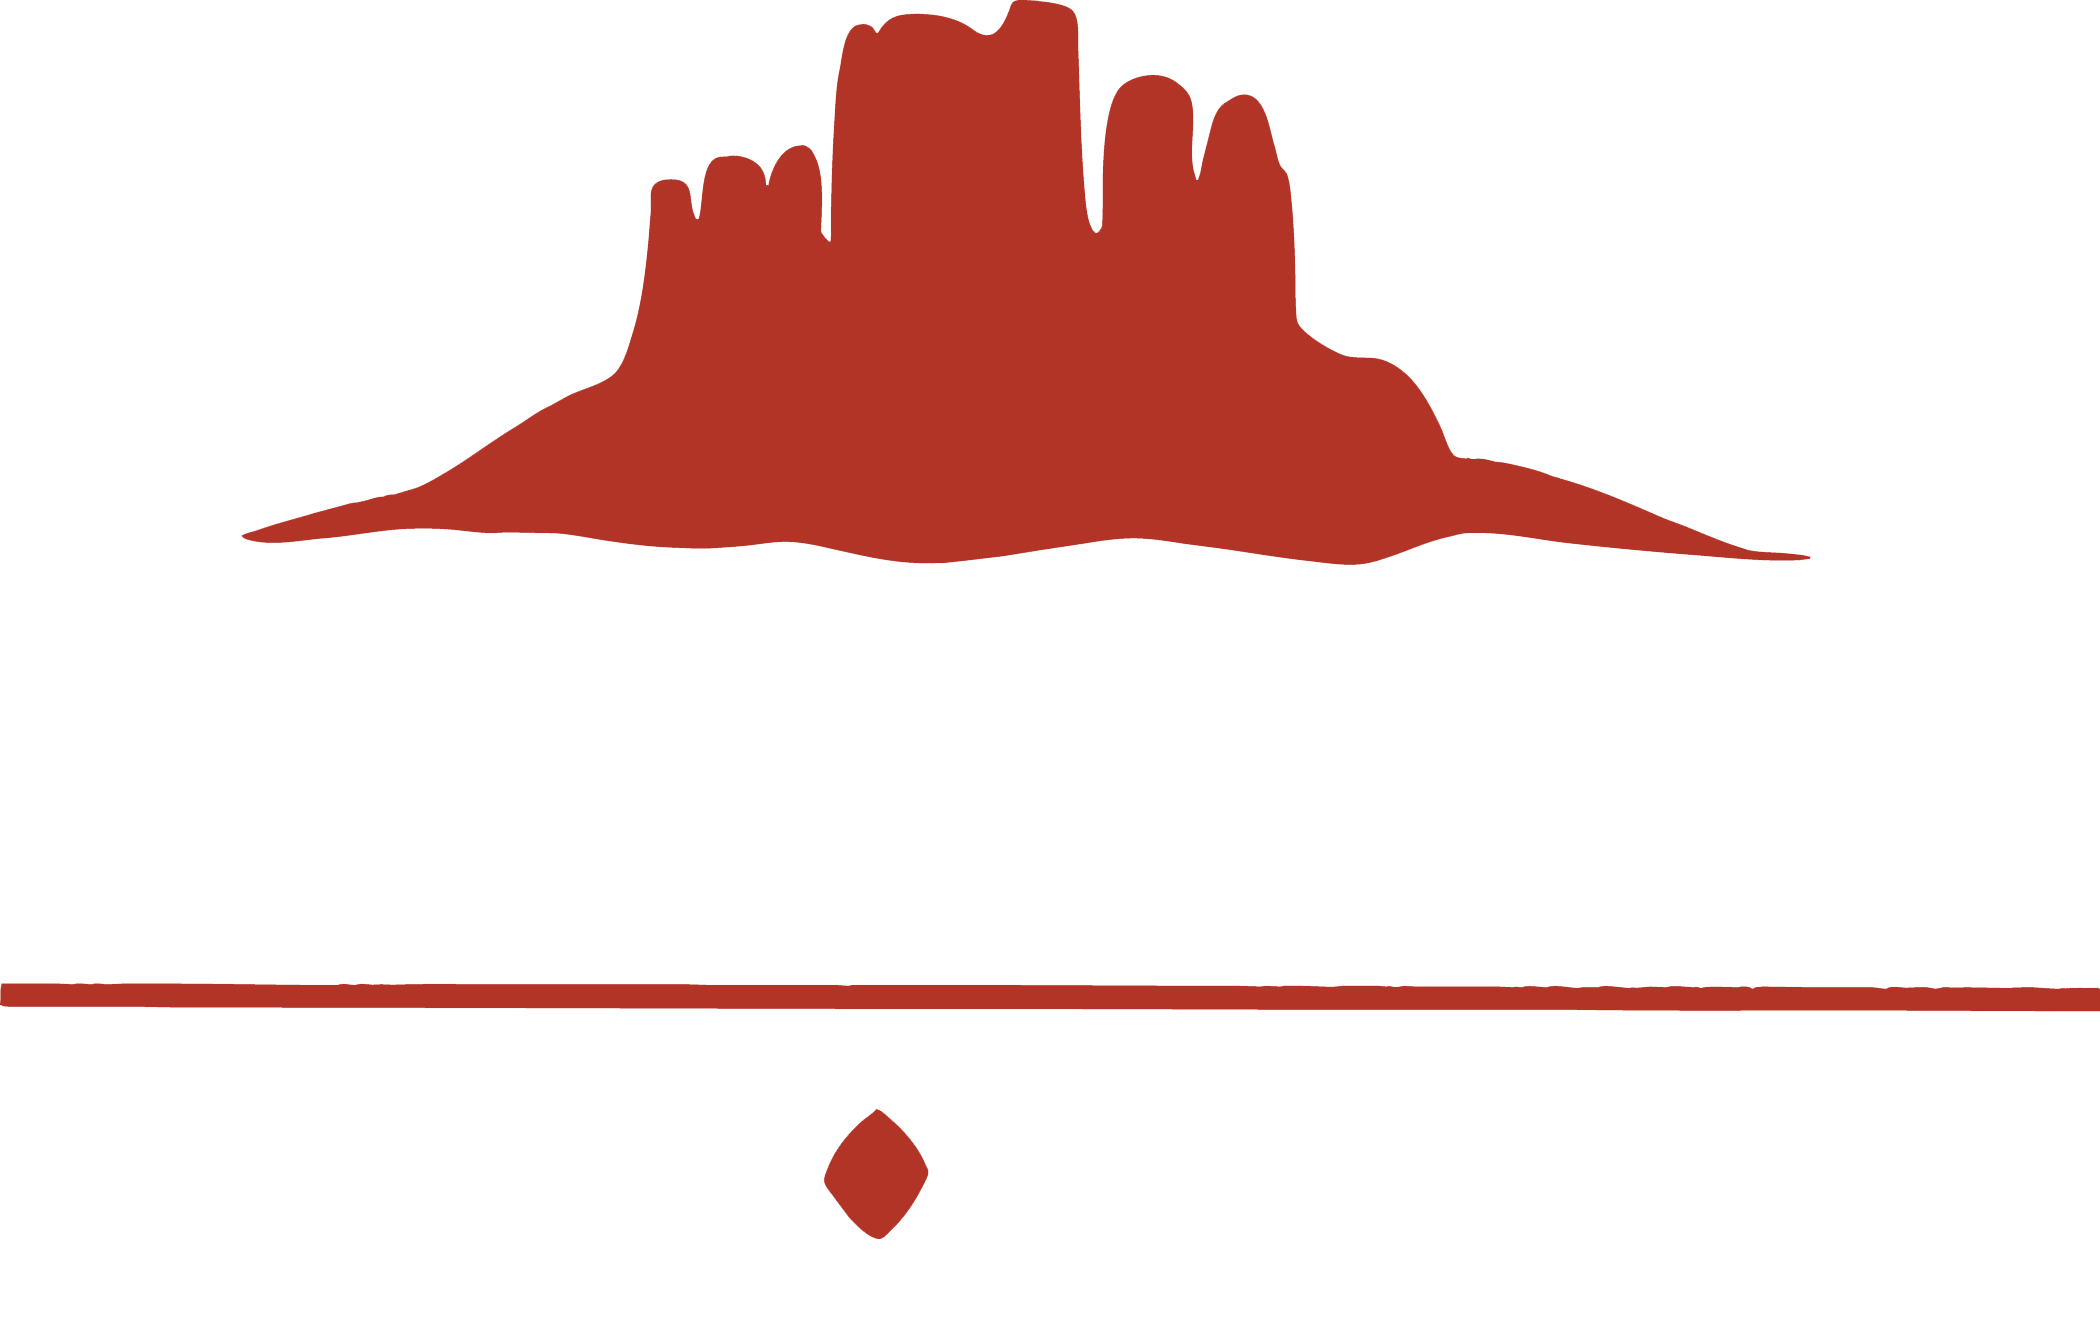 Sedona Golf Resort Sedona Golf Resort - Sedona Golf Resort (2100x1337), Png Download